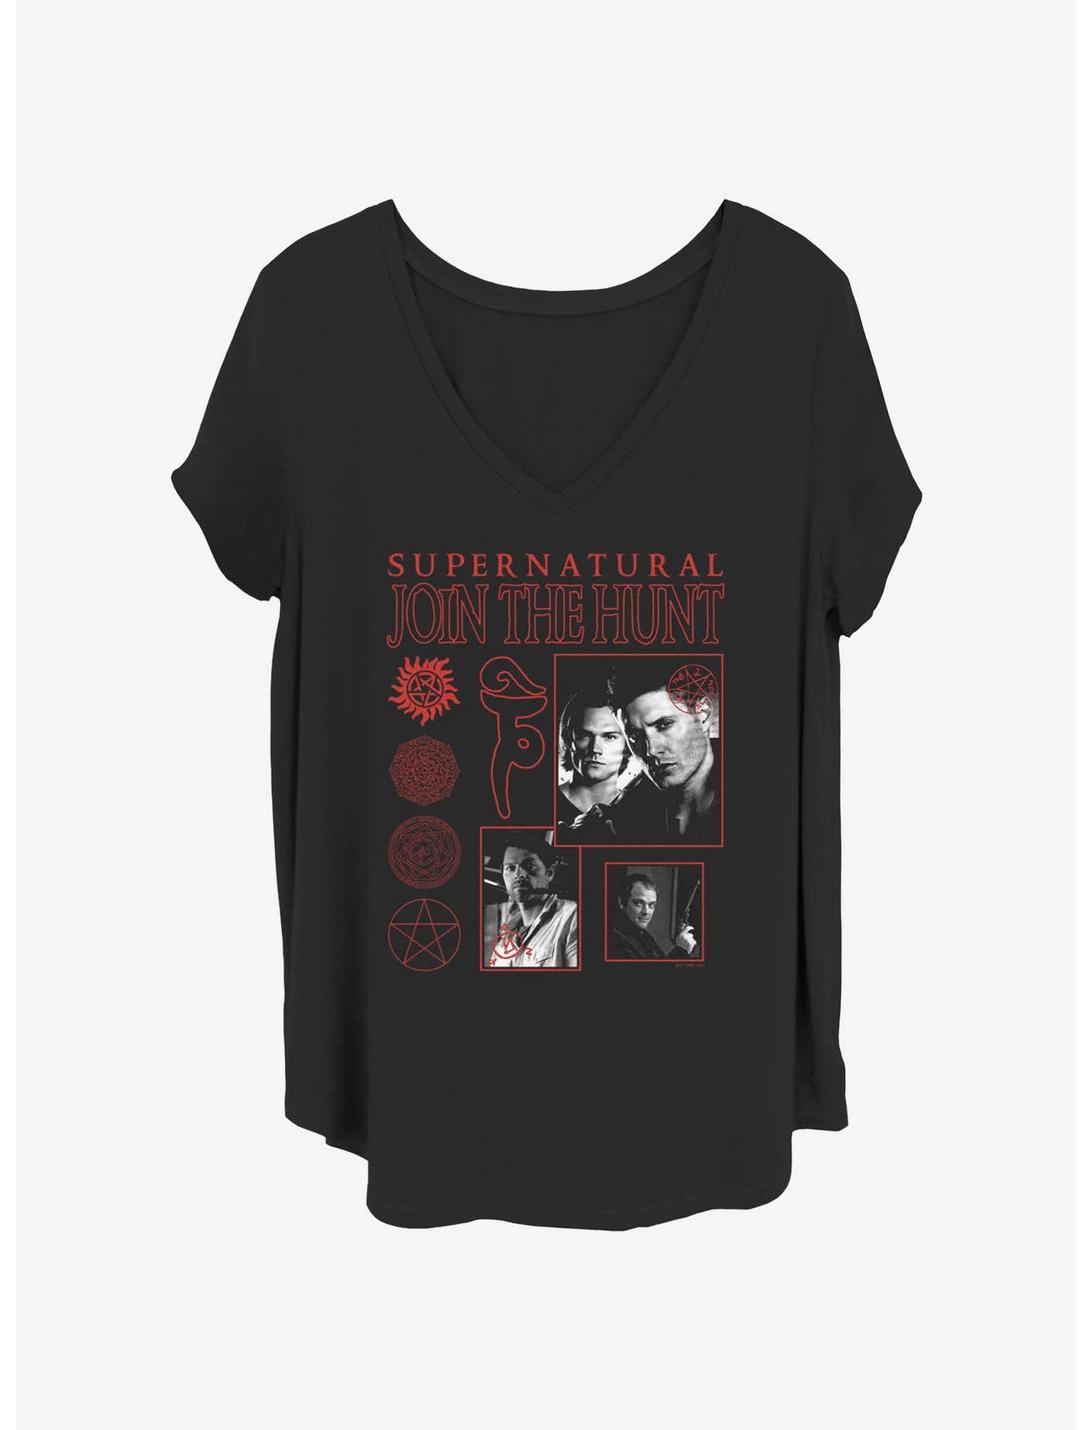 Supernatural Join The Huntt Girls T-Shirt Plus Size, BLACK, hi-res